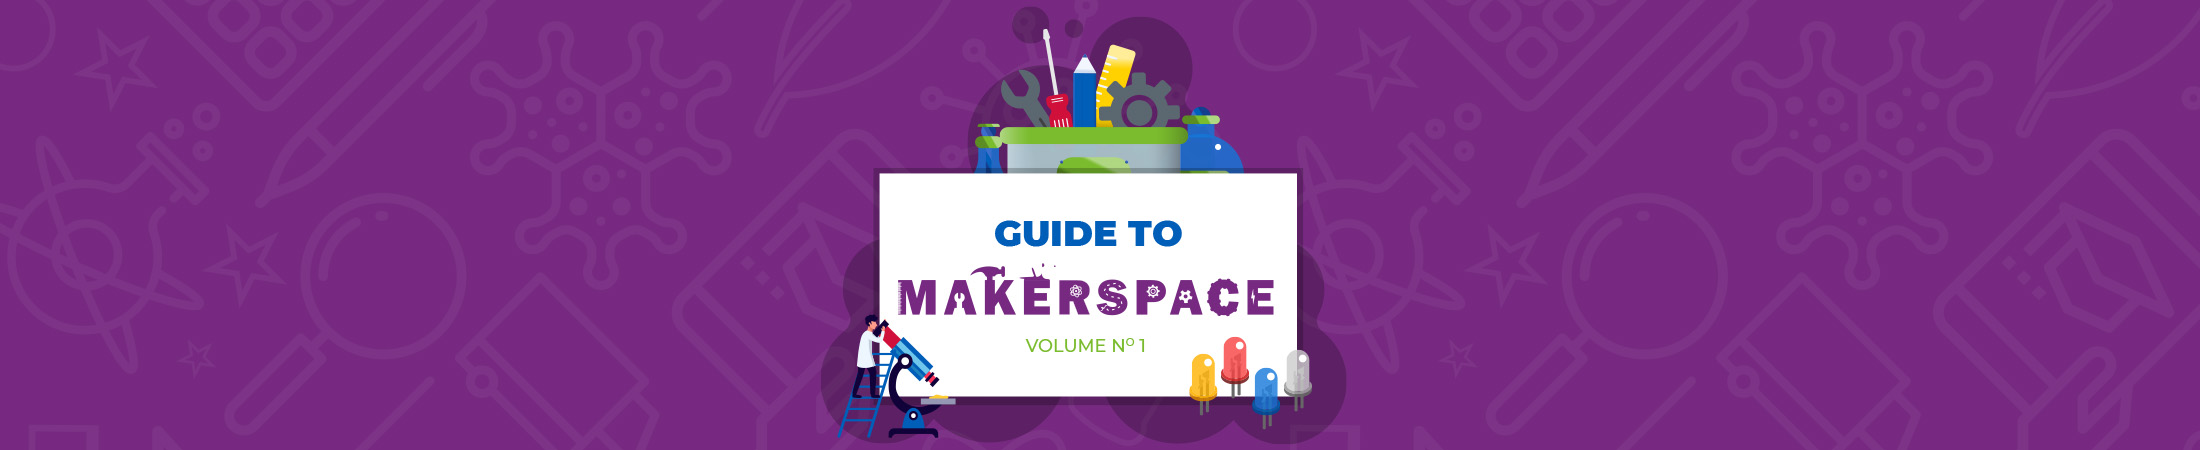 GuidetoMakerspace_vol1_LP